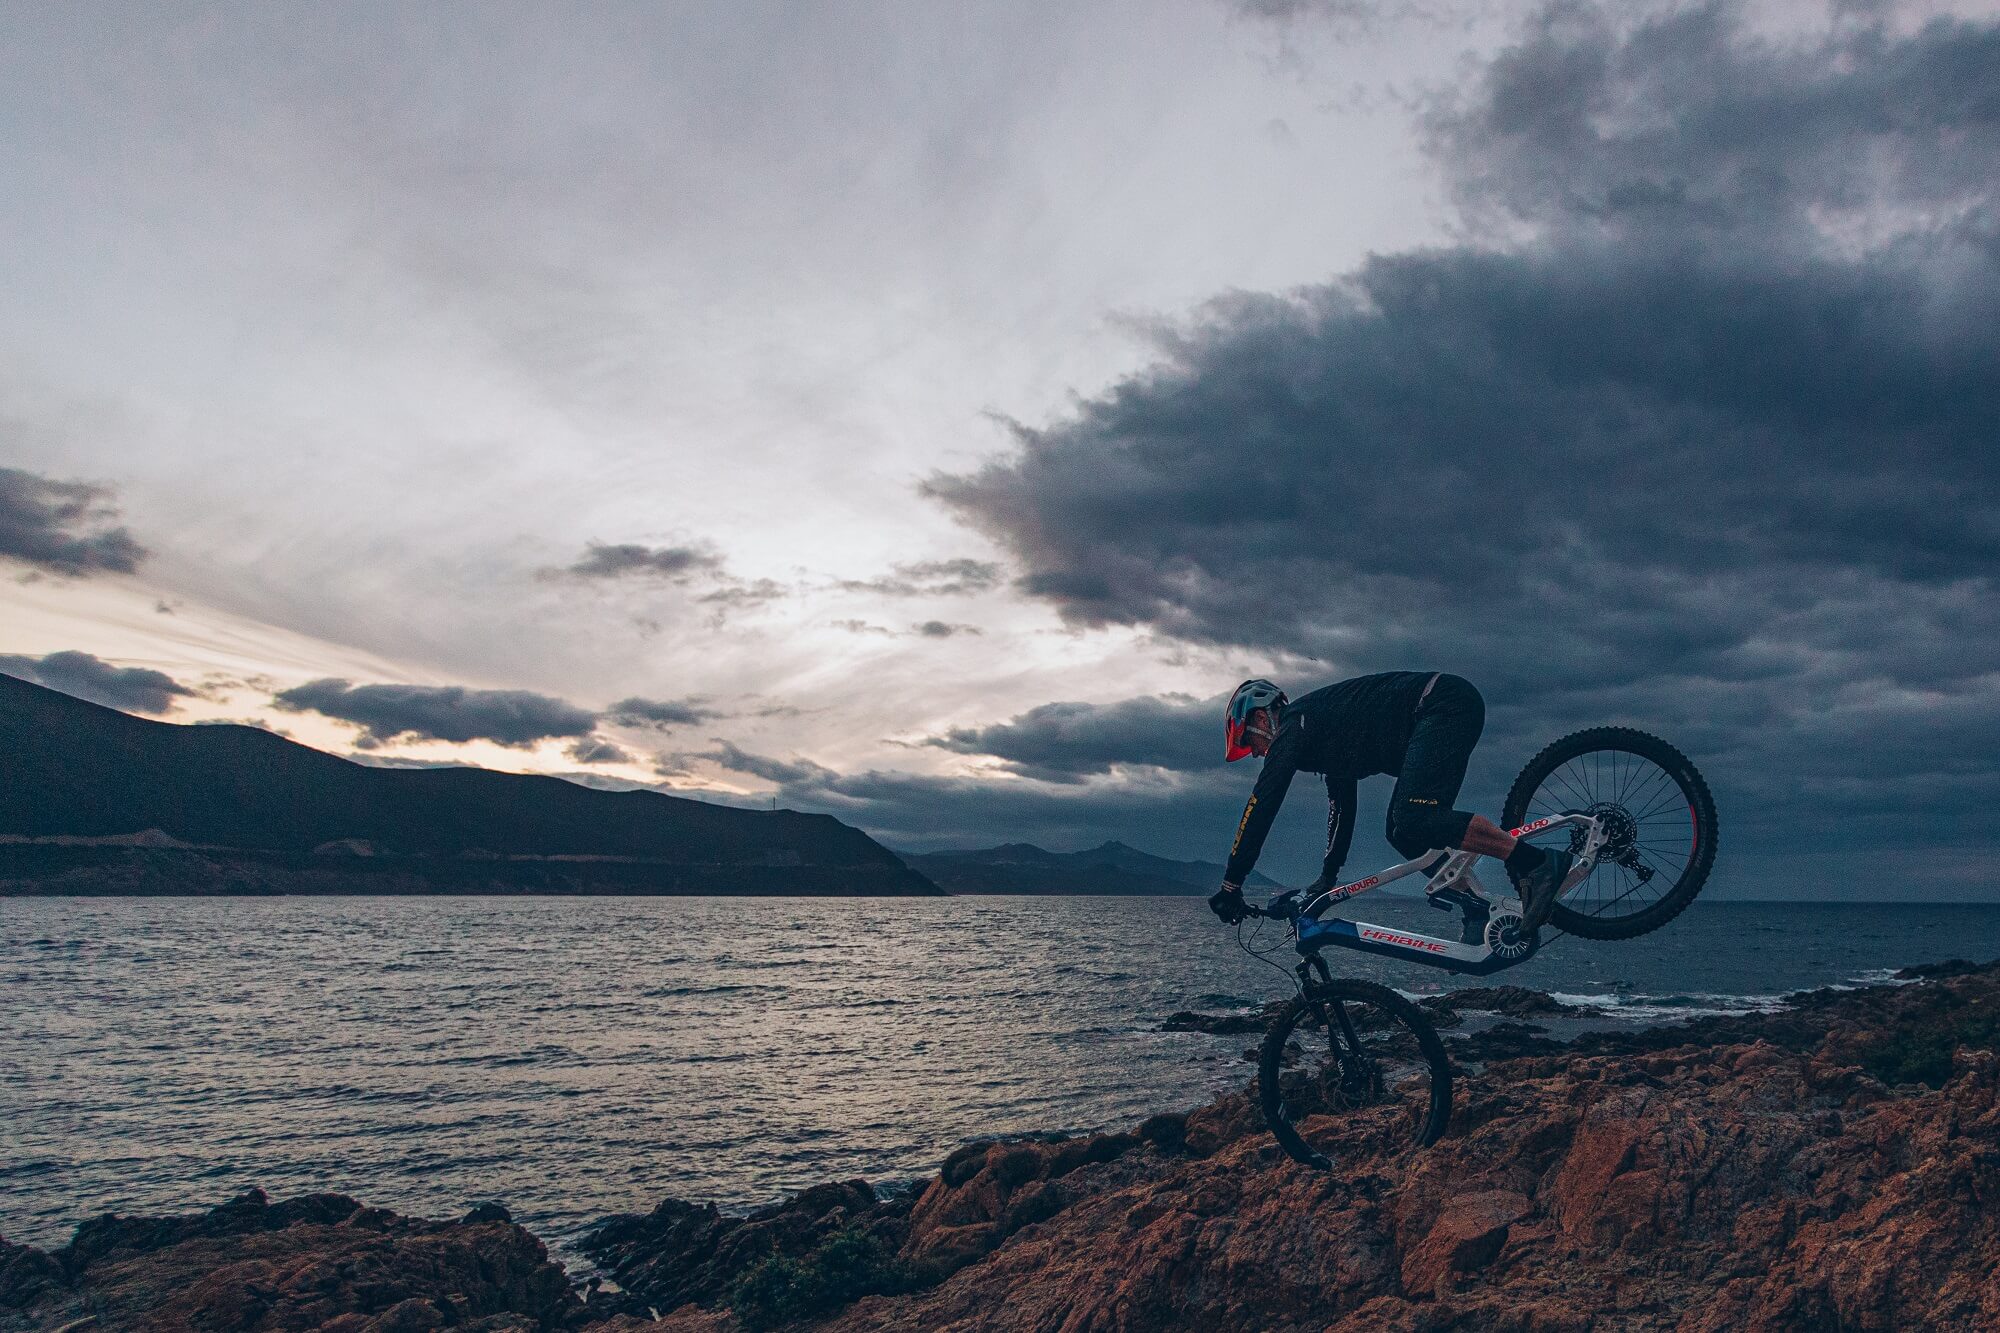 Photoshoot de Haibike Corsica, Xavier Marovelli faisant un wheelie sur sa roue avant